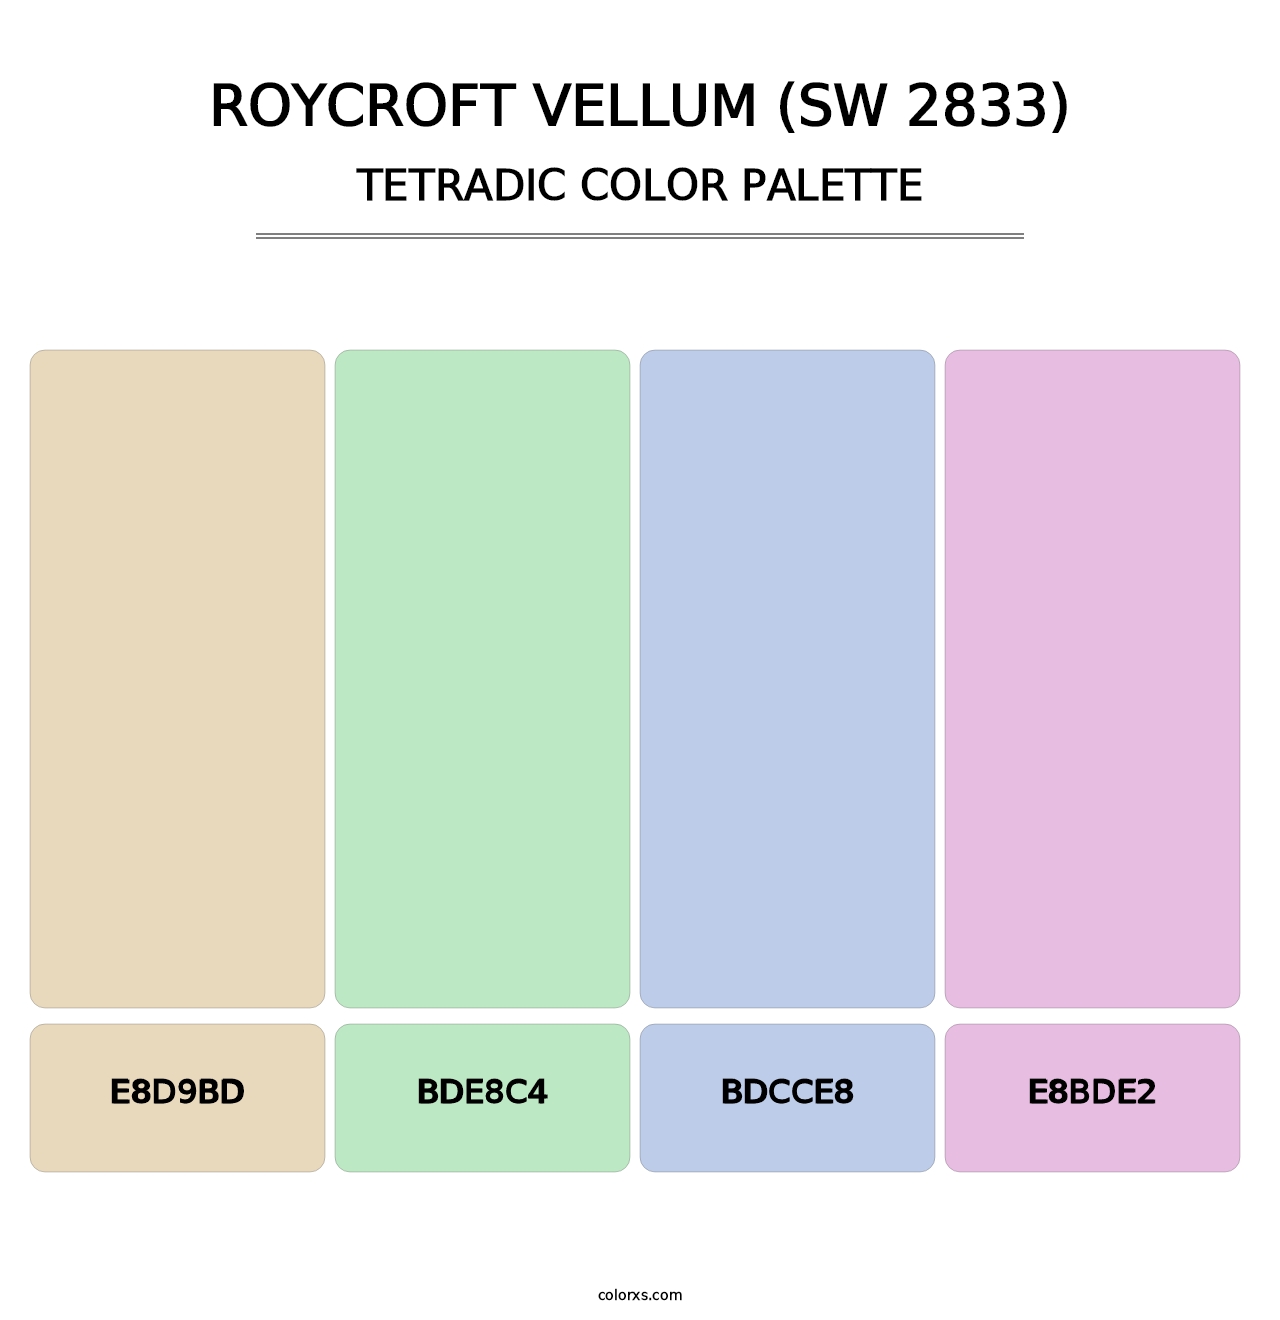 Roycroft Vellum (SW 2833) - Tetradic Color Palette